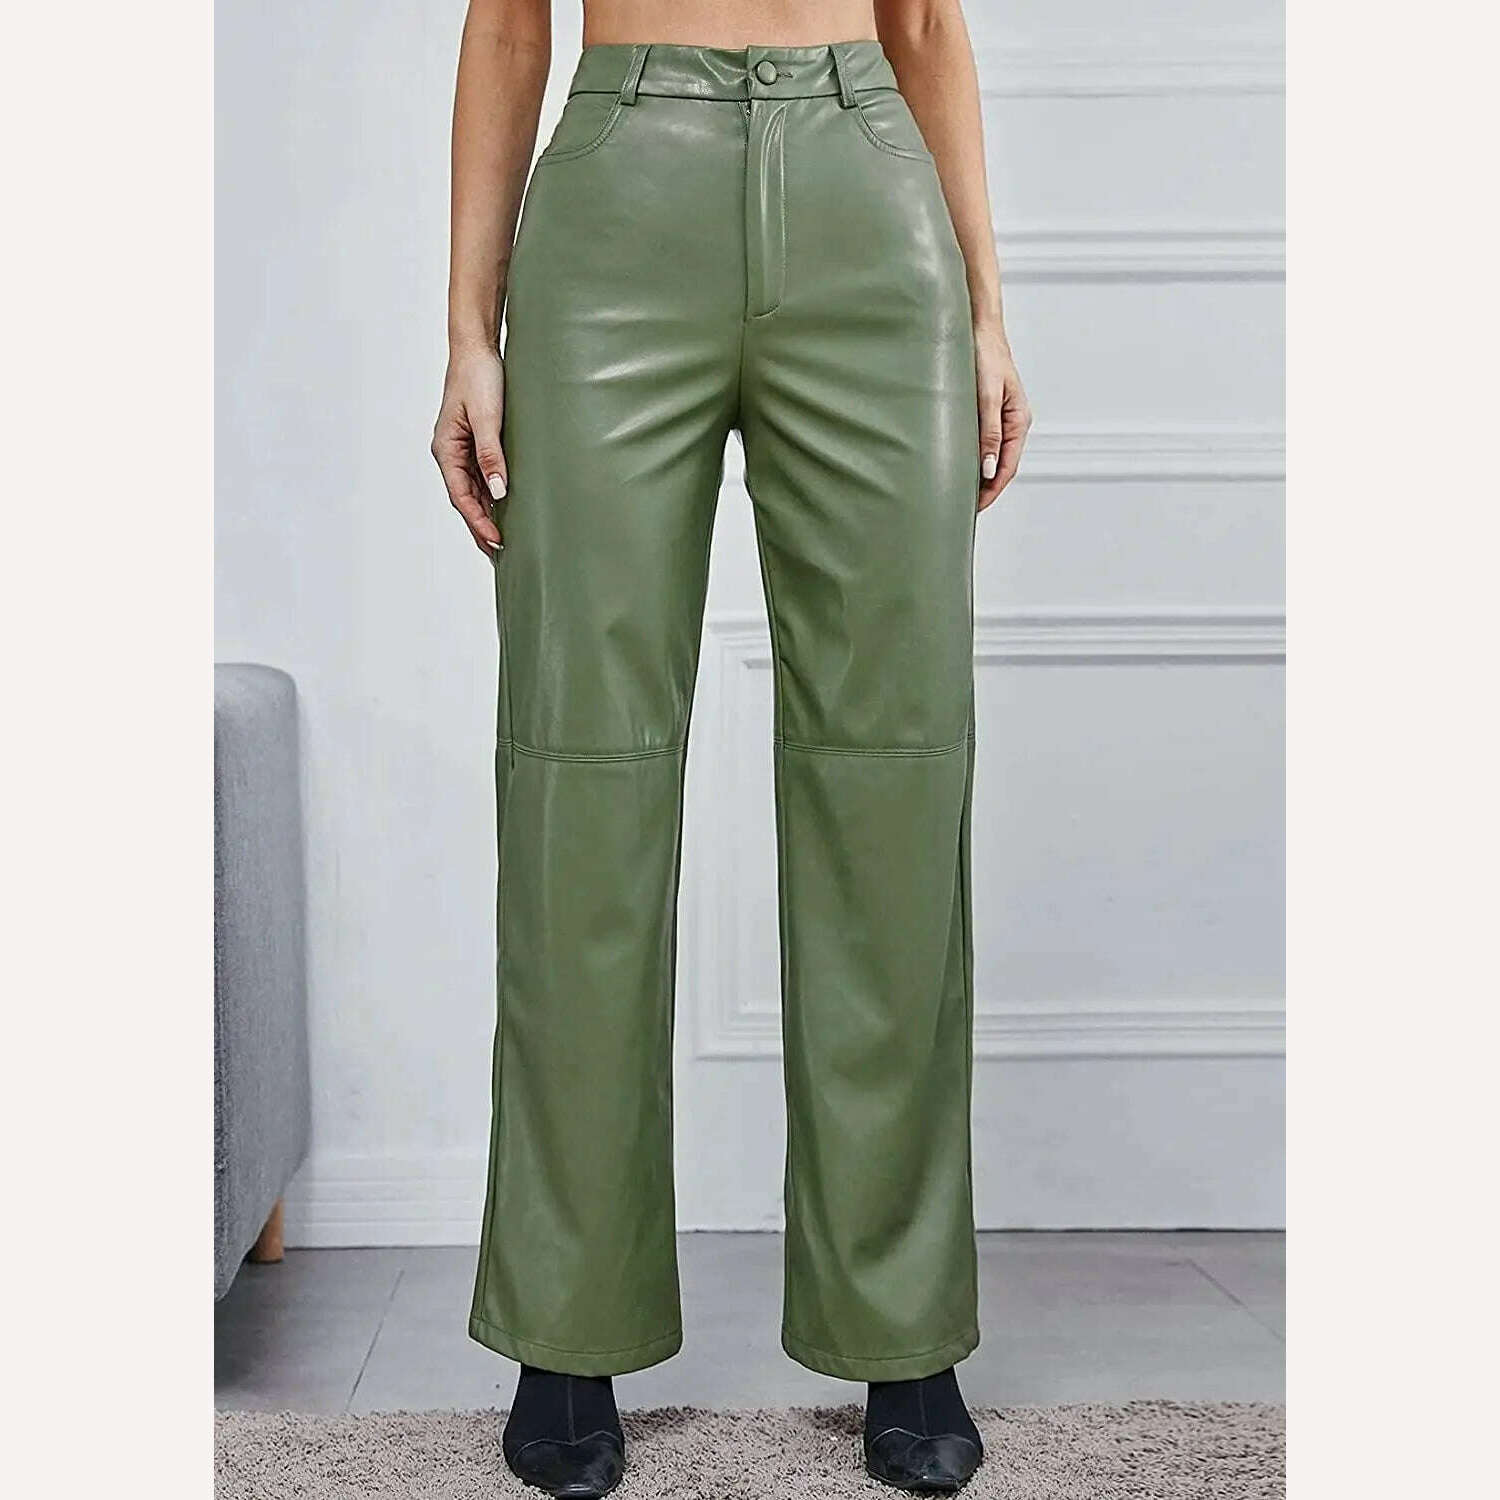 KIMLUD, PU Leather Pants High Waist Pockets Women&#39;s Green Black Wide Leg Pants 2021 Autumn Winter Fashion New TrousersBlusas Loose Shirt, Green / XS, KIMLUD Womens Clothes